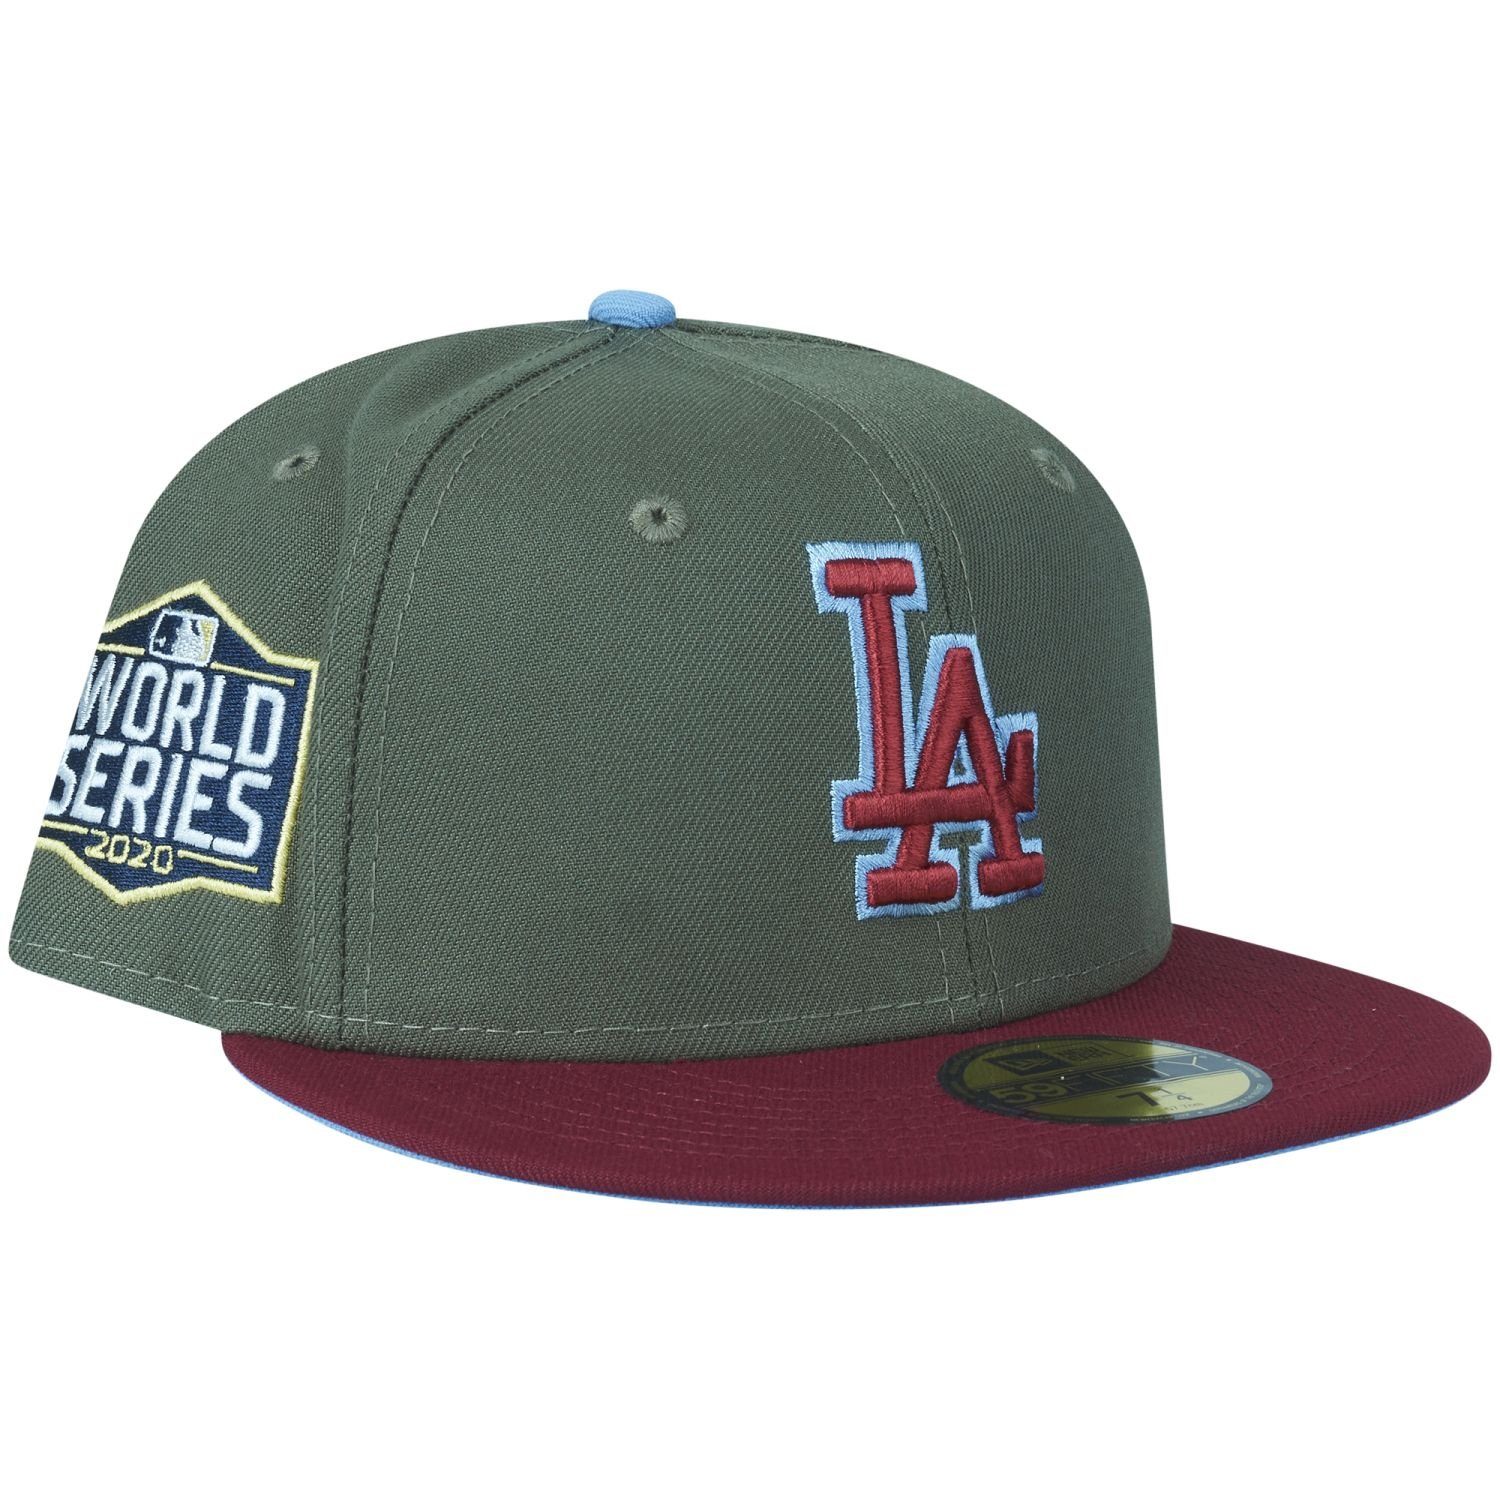 New Era Fitted Cap 59Fifty WORLD SERIES 2020 LA Dodgers